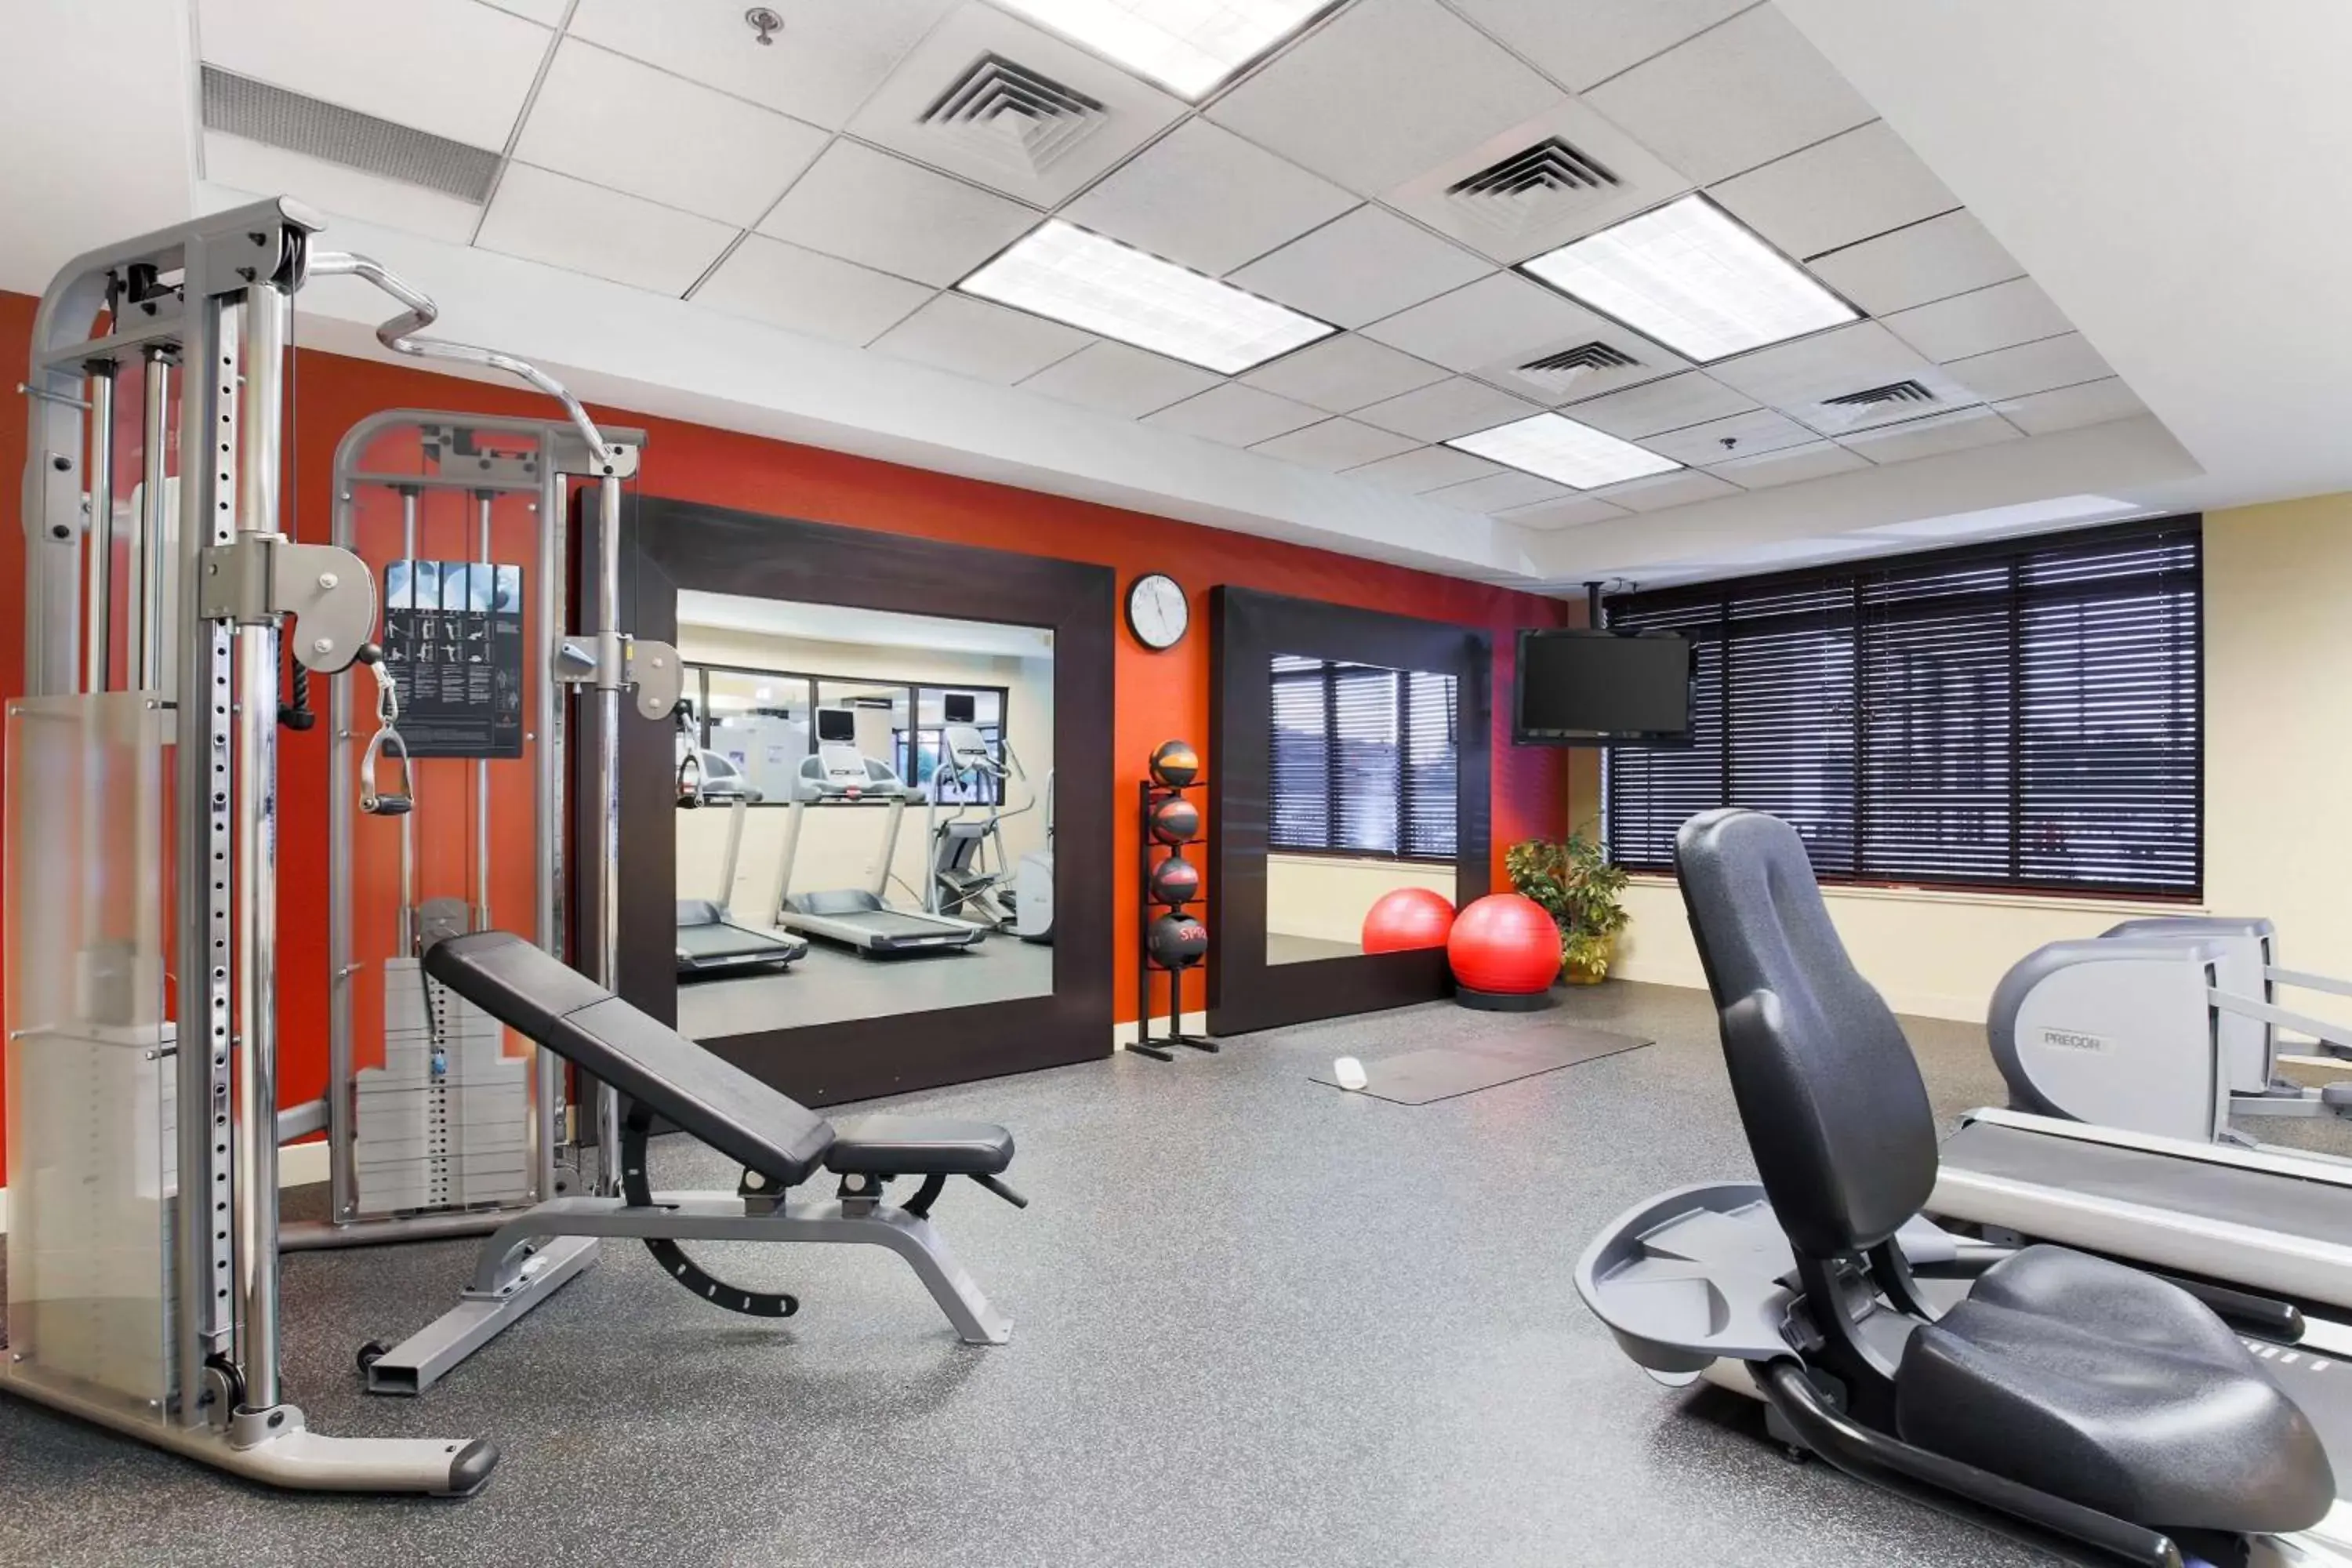 Fitness centre/facilities, Fitness Center/Facilities in Hilton Garden Inn Anchorage